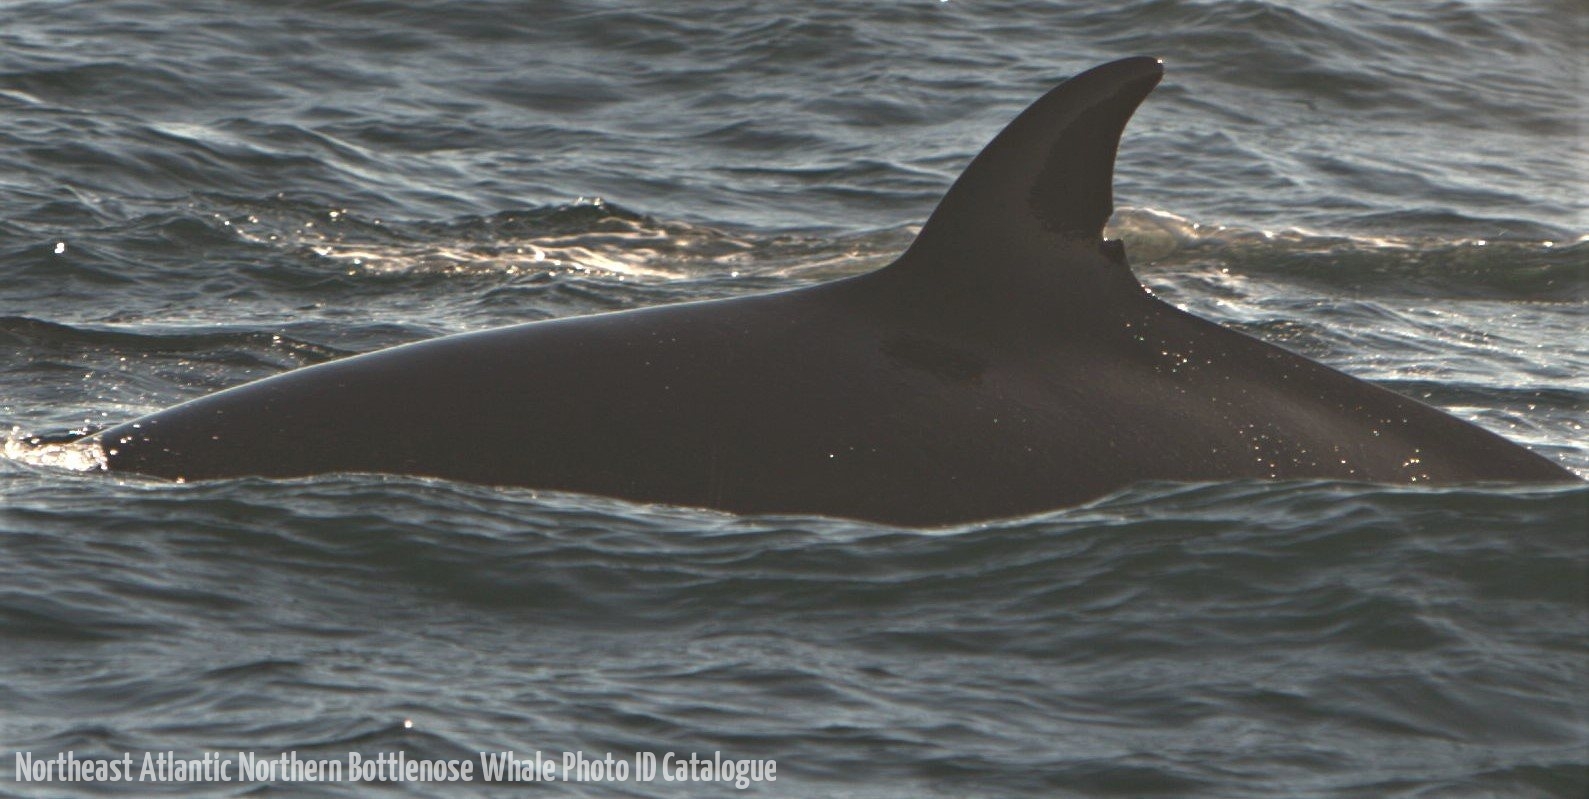 Whale ID: 0068,  Date taken: 15-06-2015,  Photographer: Tomoko Narazaki